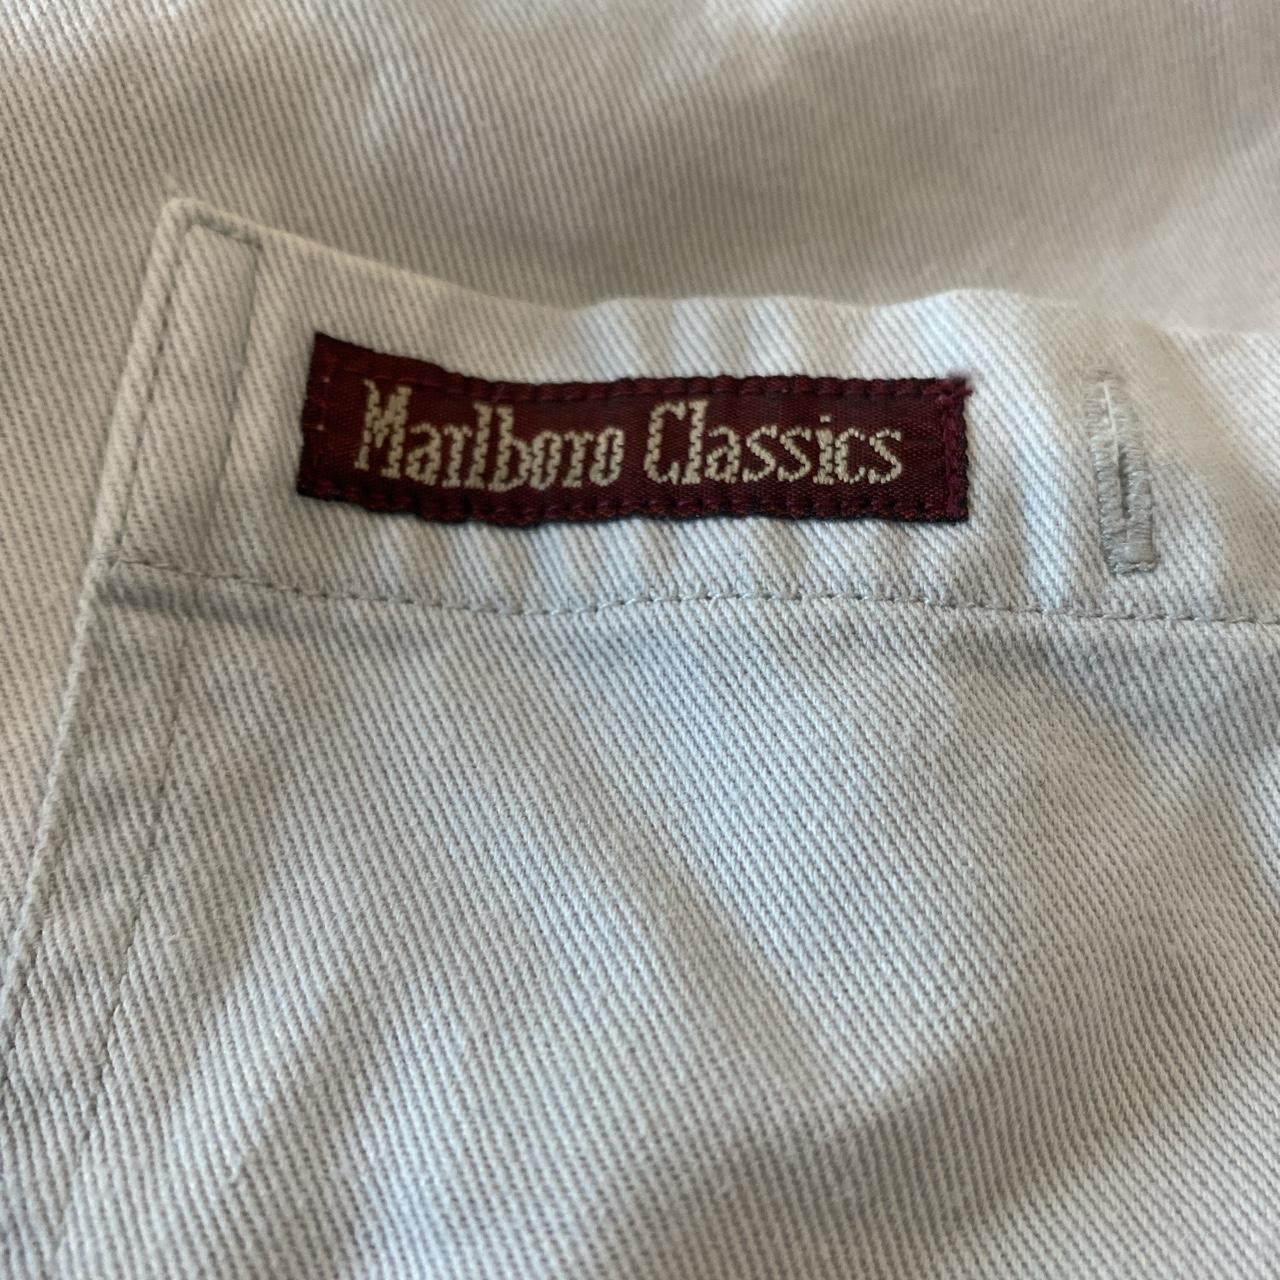 marlboro classic denim long sleeve shirt classic... - Depop